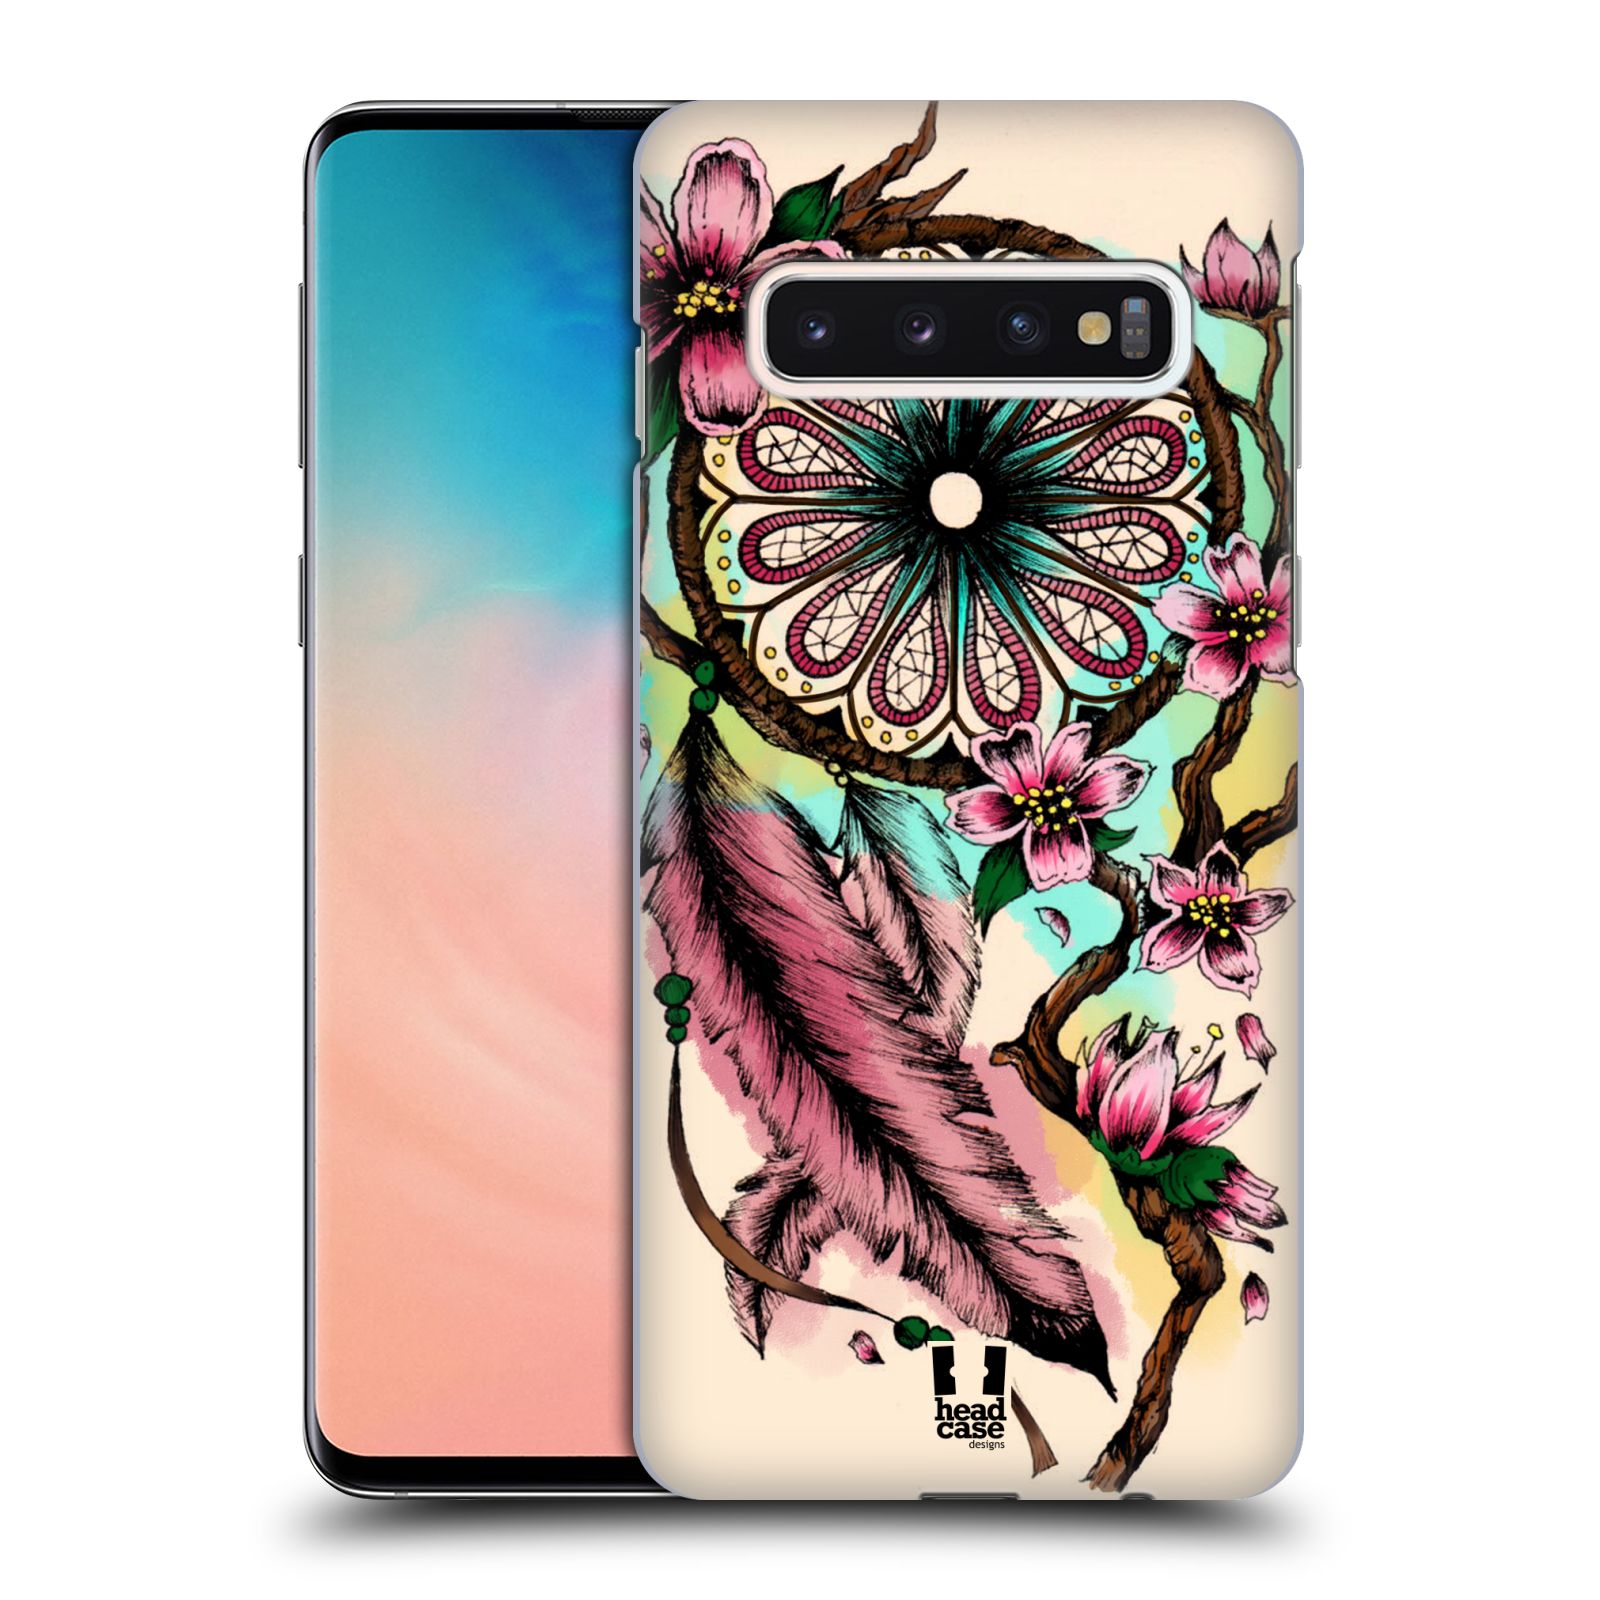 Pouzdro na mobil Samsung Galaxy S10 - HEAD CASE - vzor Květy lapač snů růžová